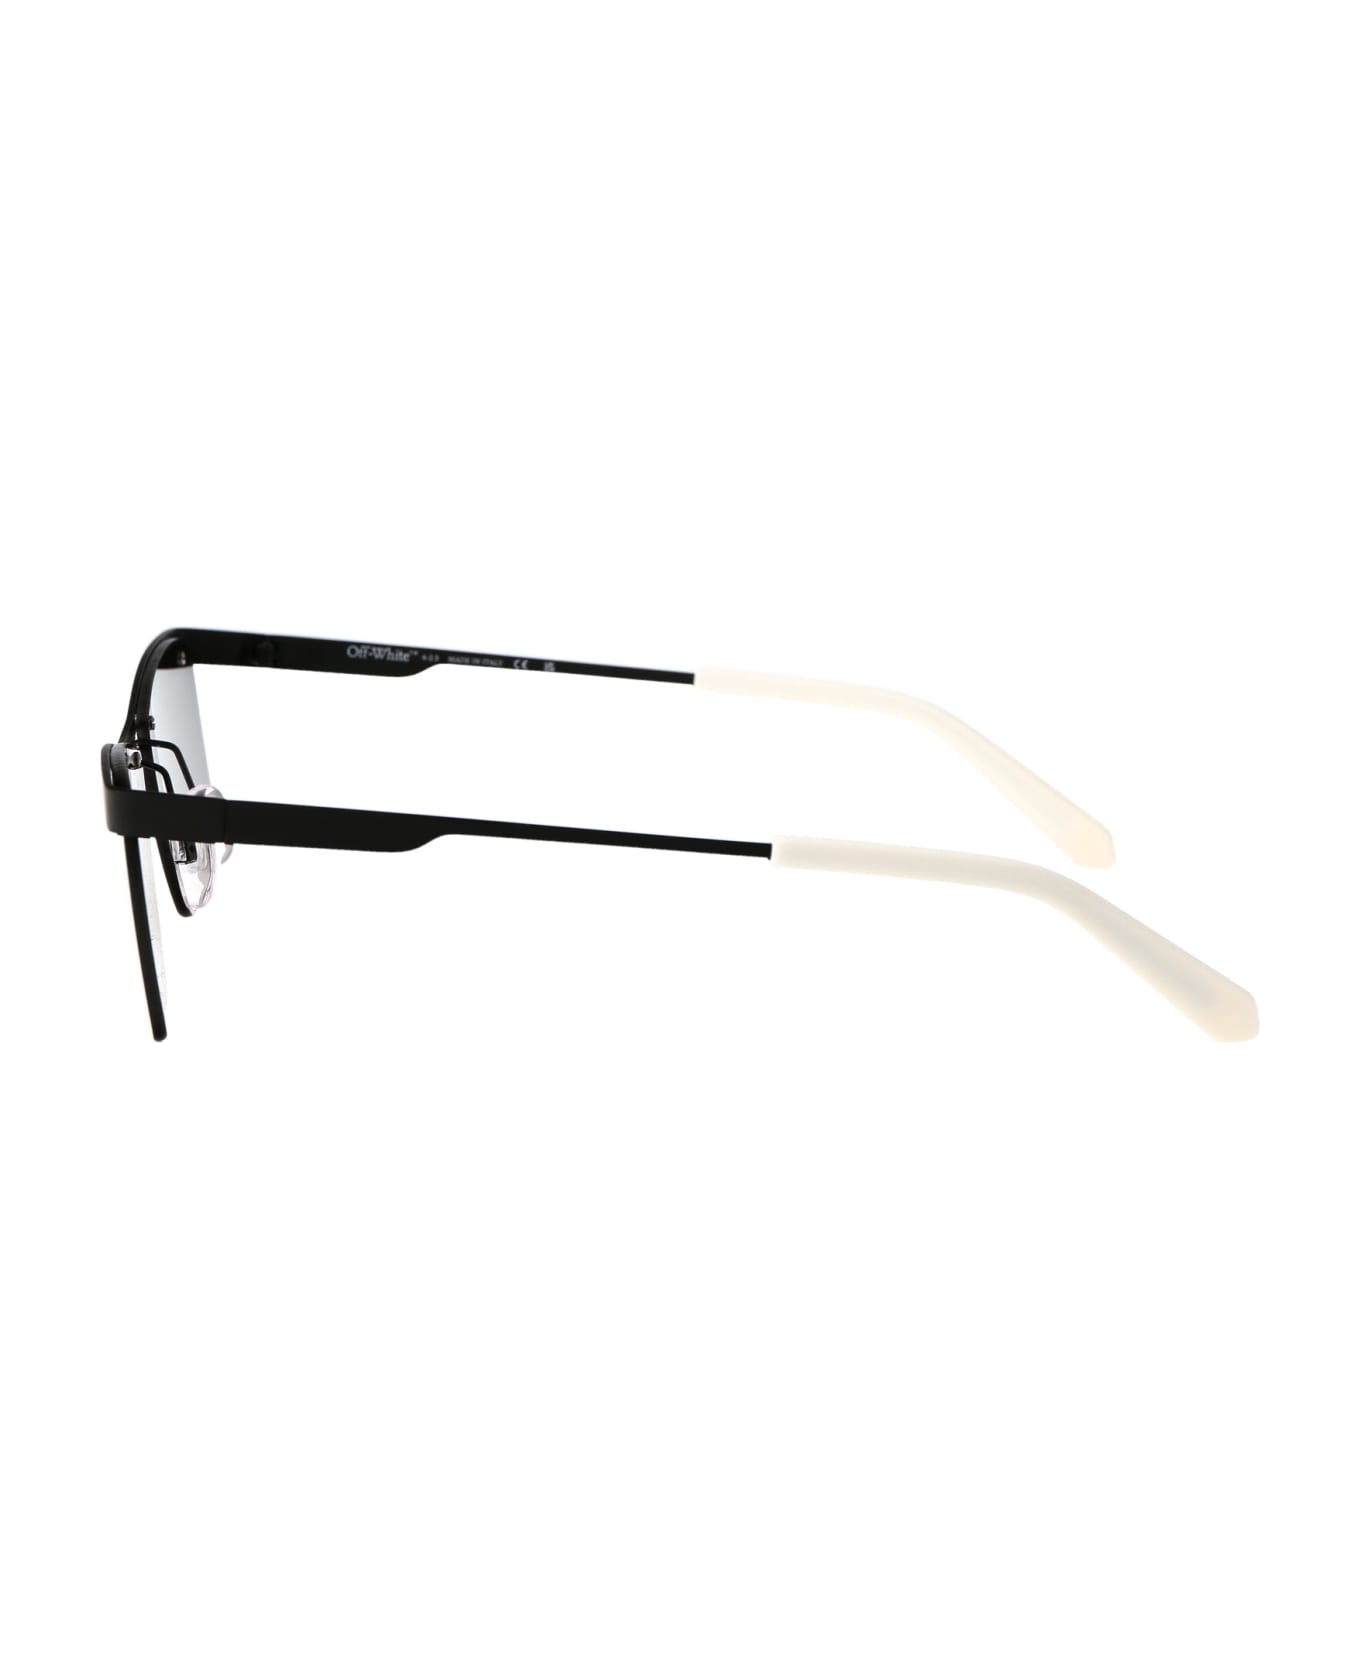 Off-White Rimini Sunglasses - 1007 BLACK